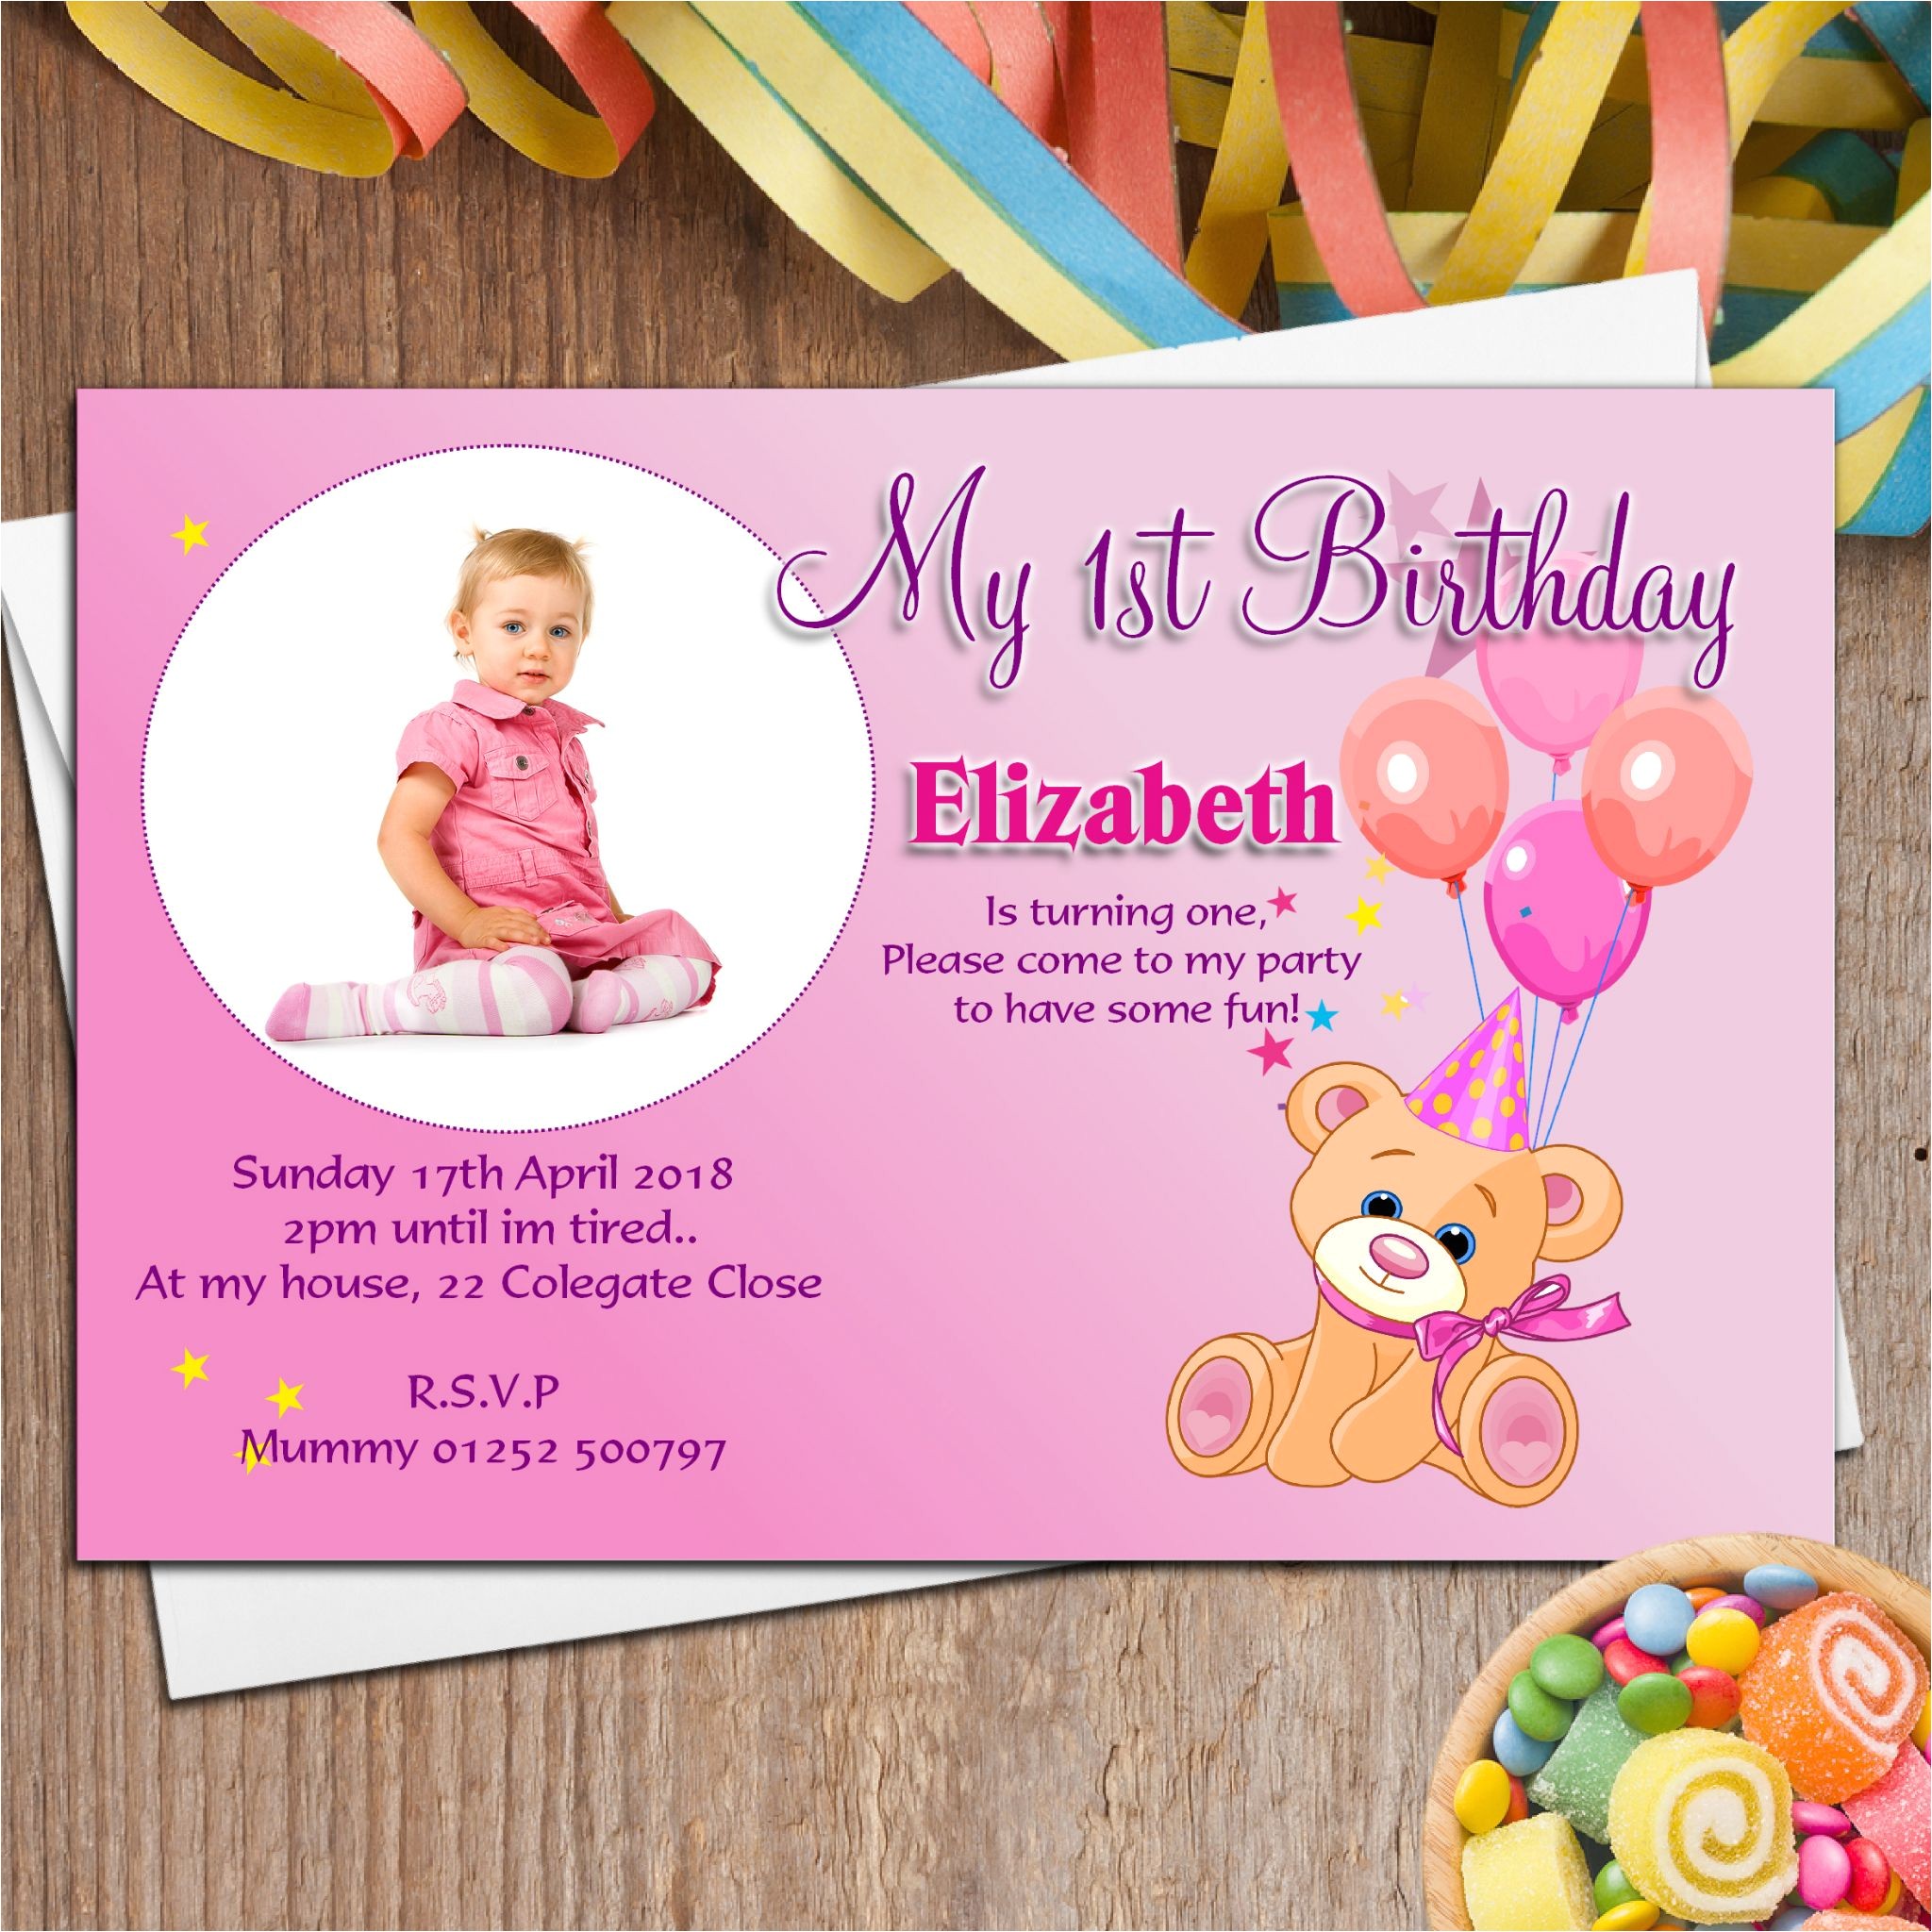 Baby First Birthday Invitation Card Matter Baby Birthday Invitation Card Matter In Marathi Various